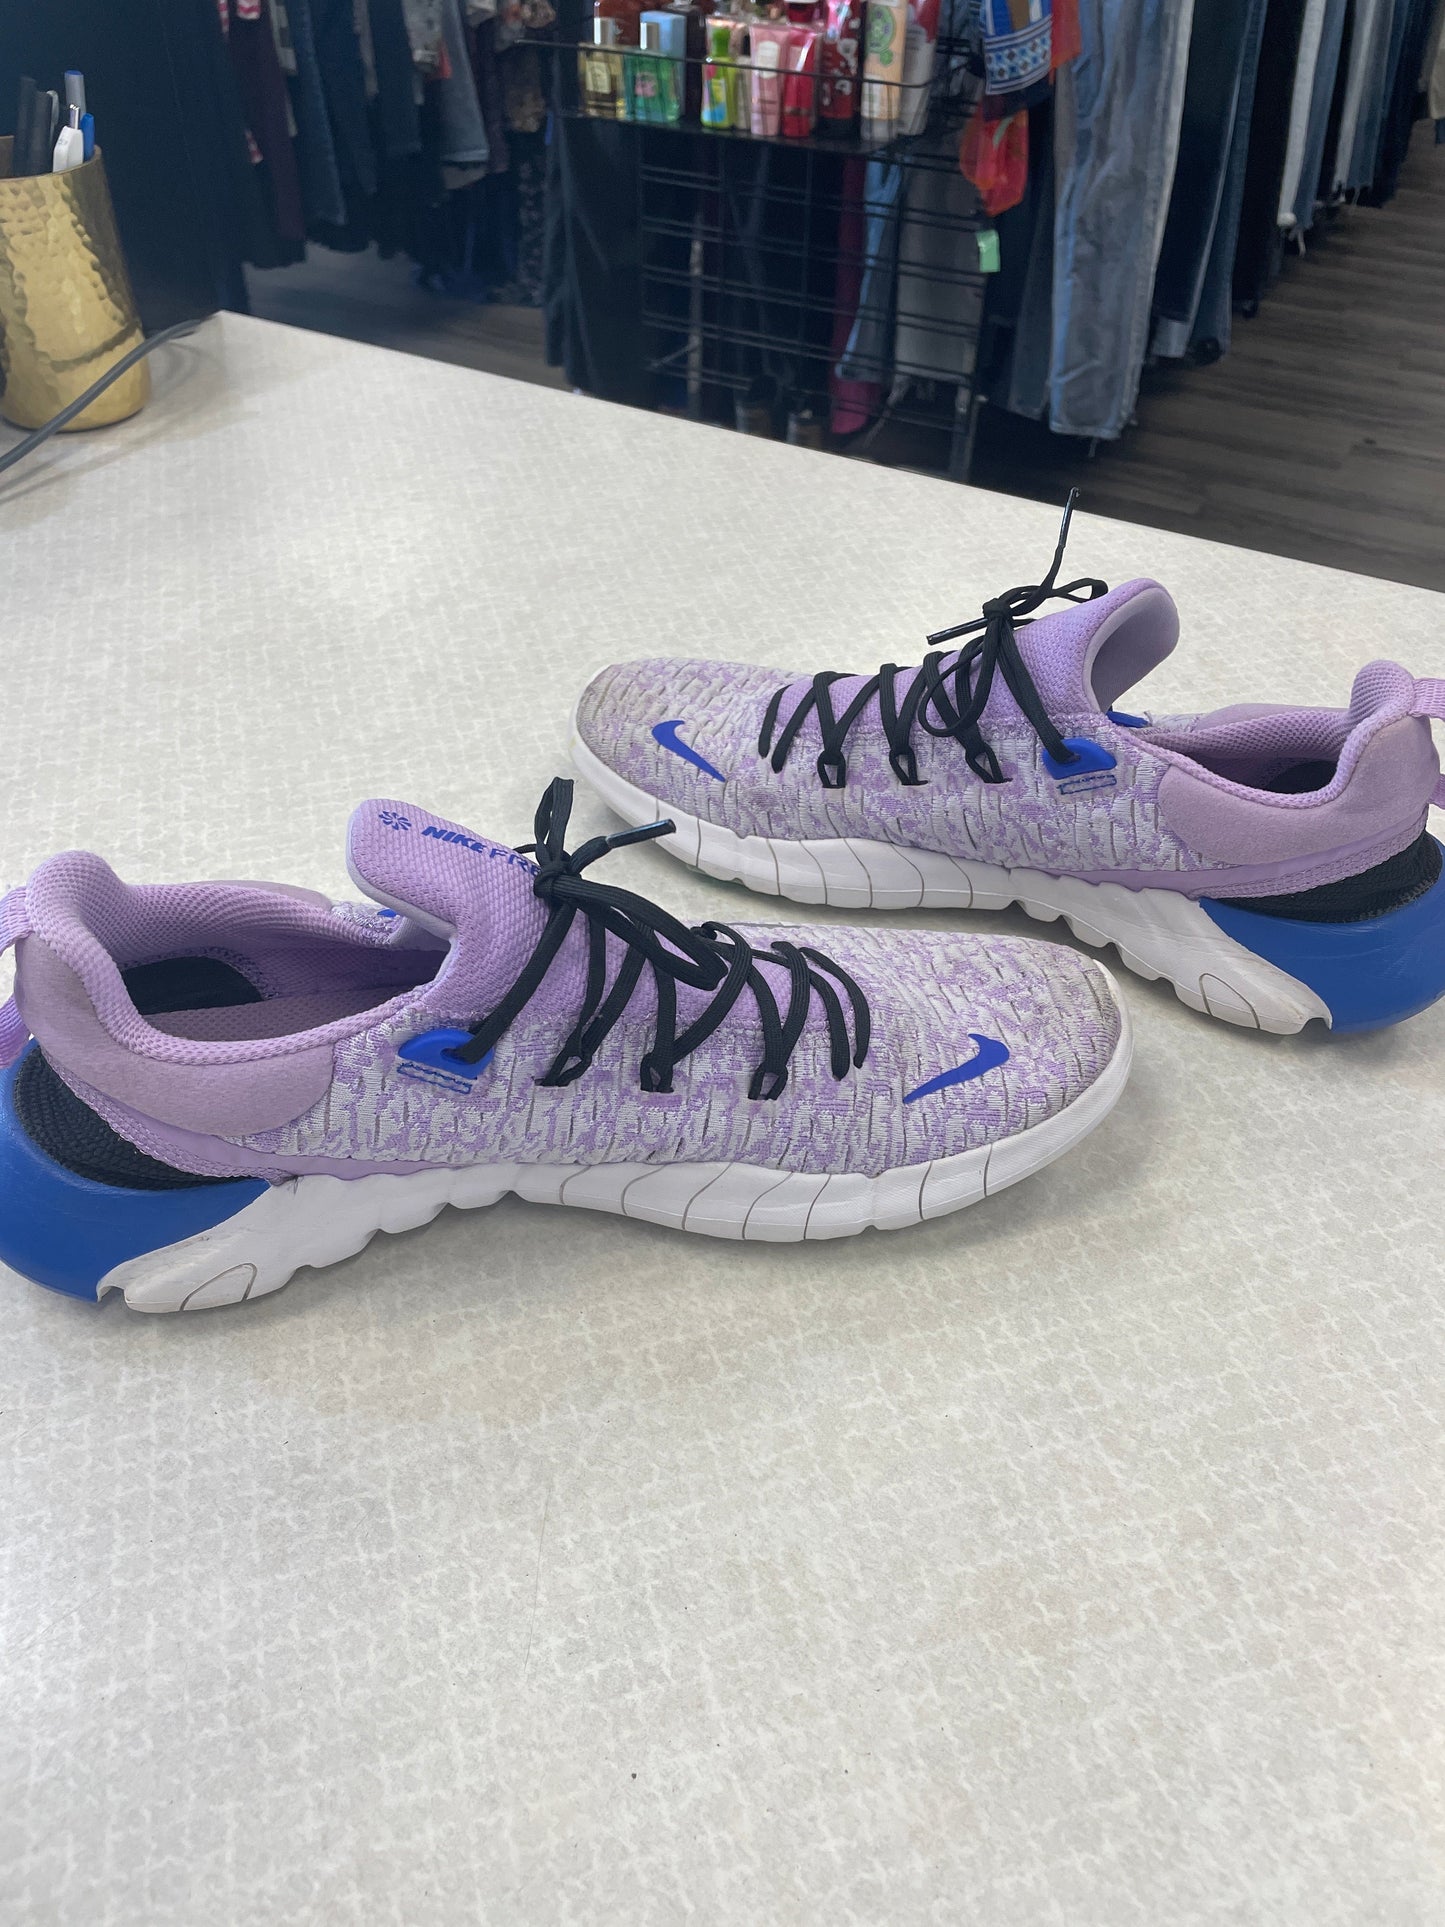 Purple Shoes Athletic Nike, Size 9.5